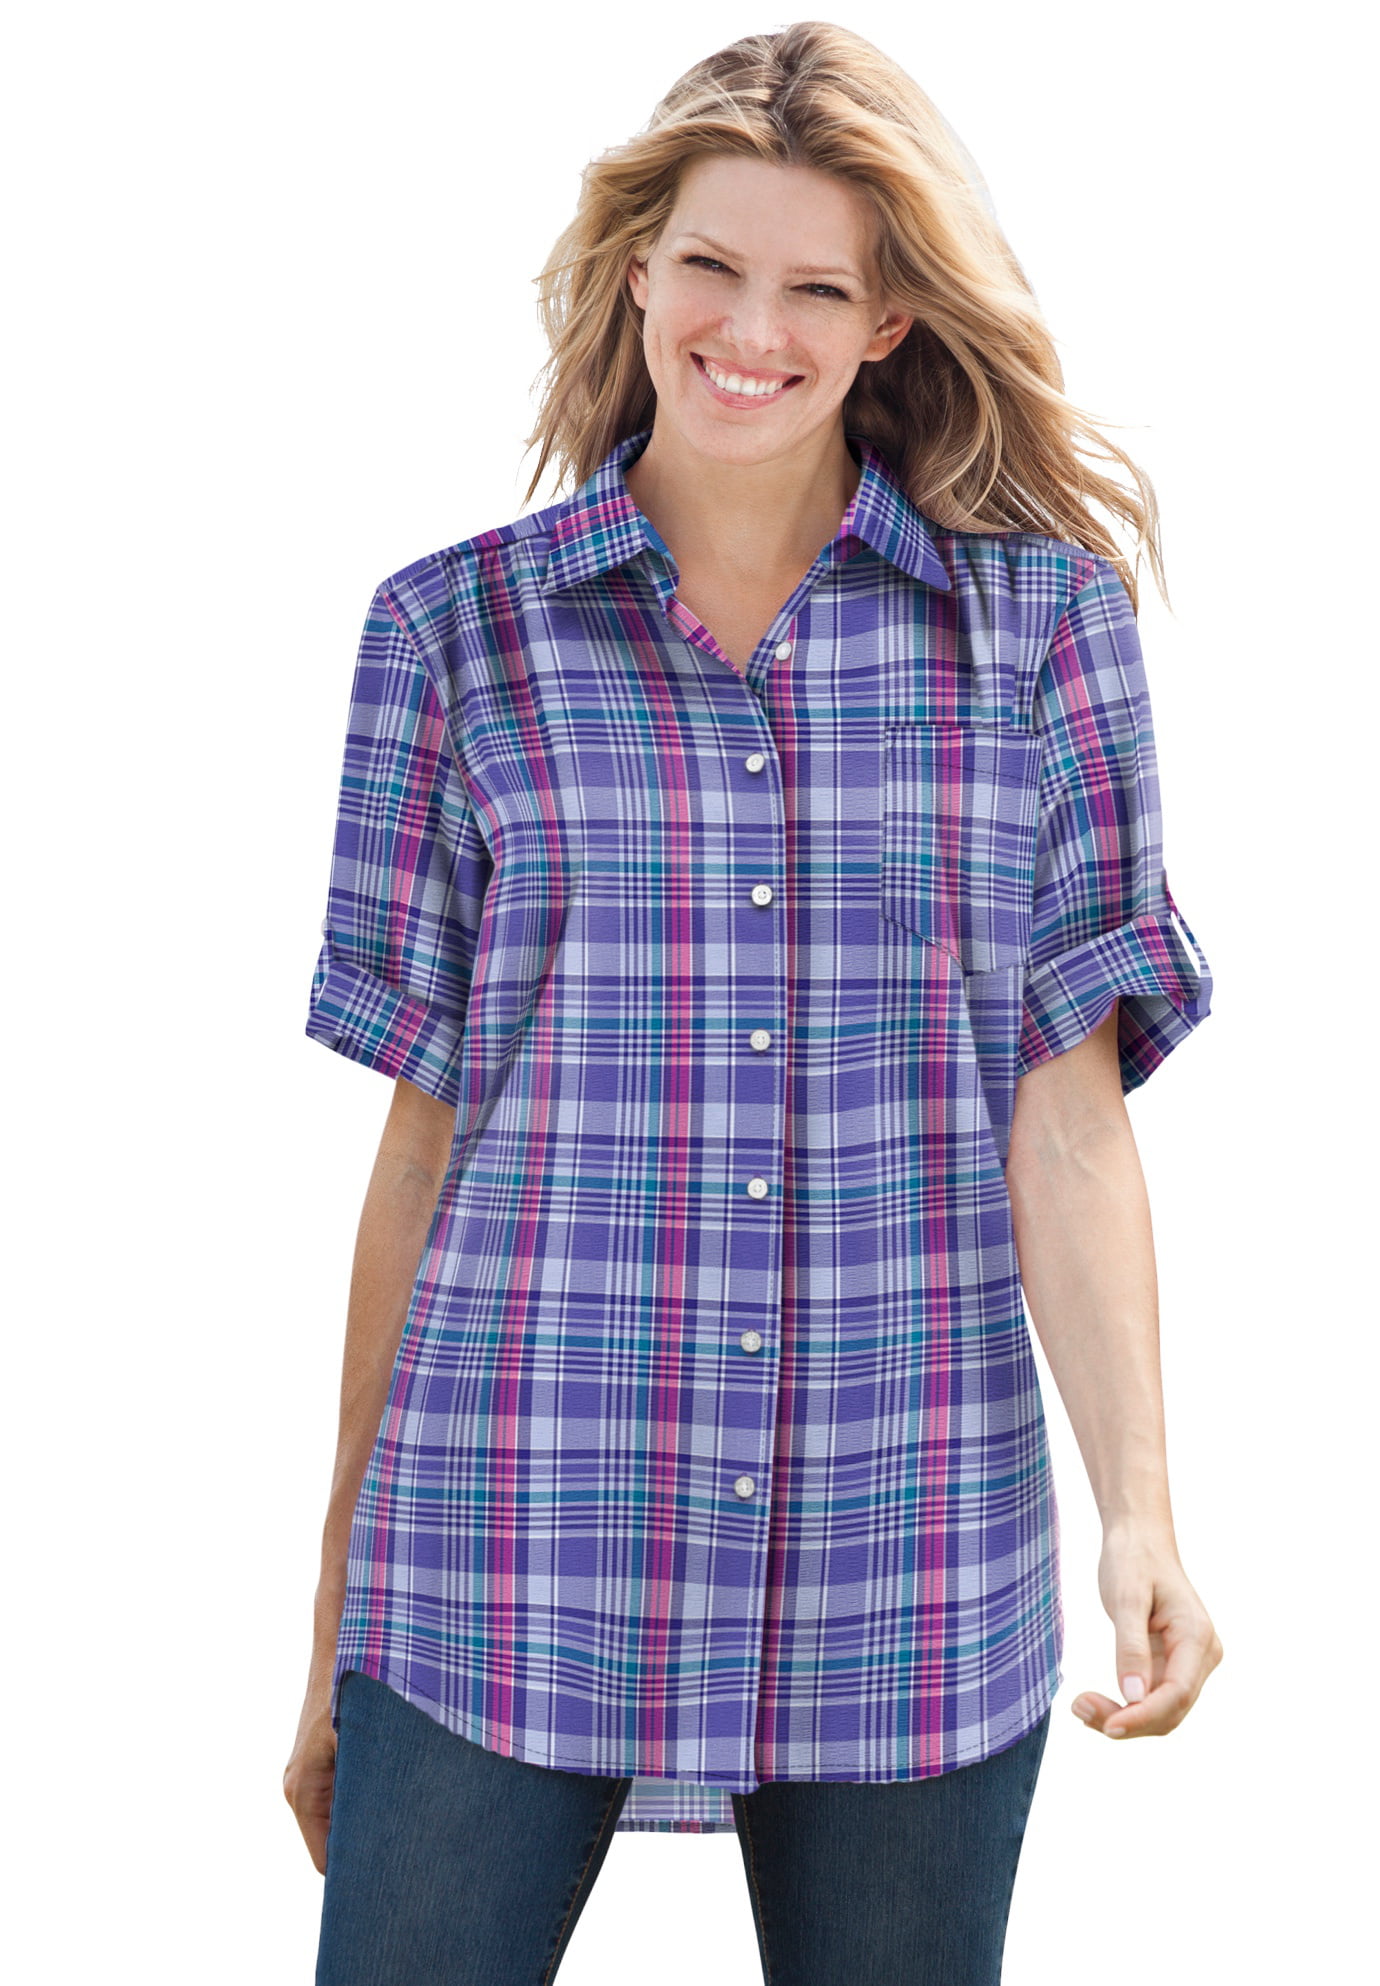 Short sleeve blouse women  Designer women's top with 3 vegetable dyed cotton fabrics